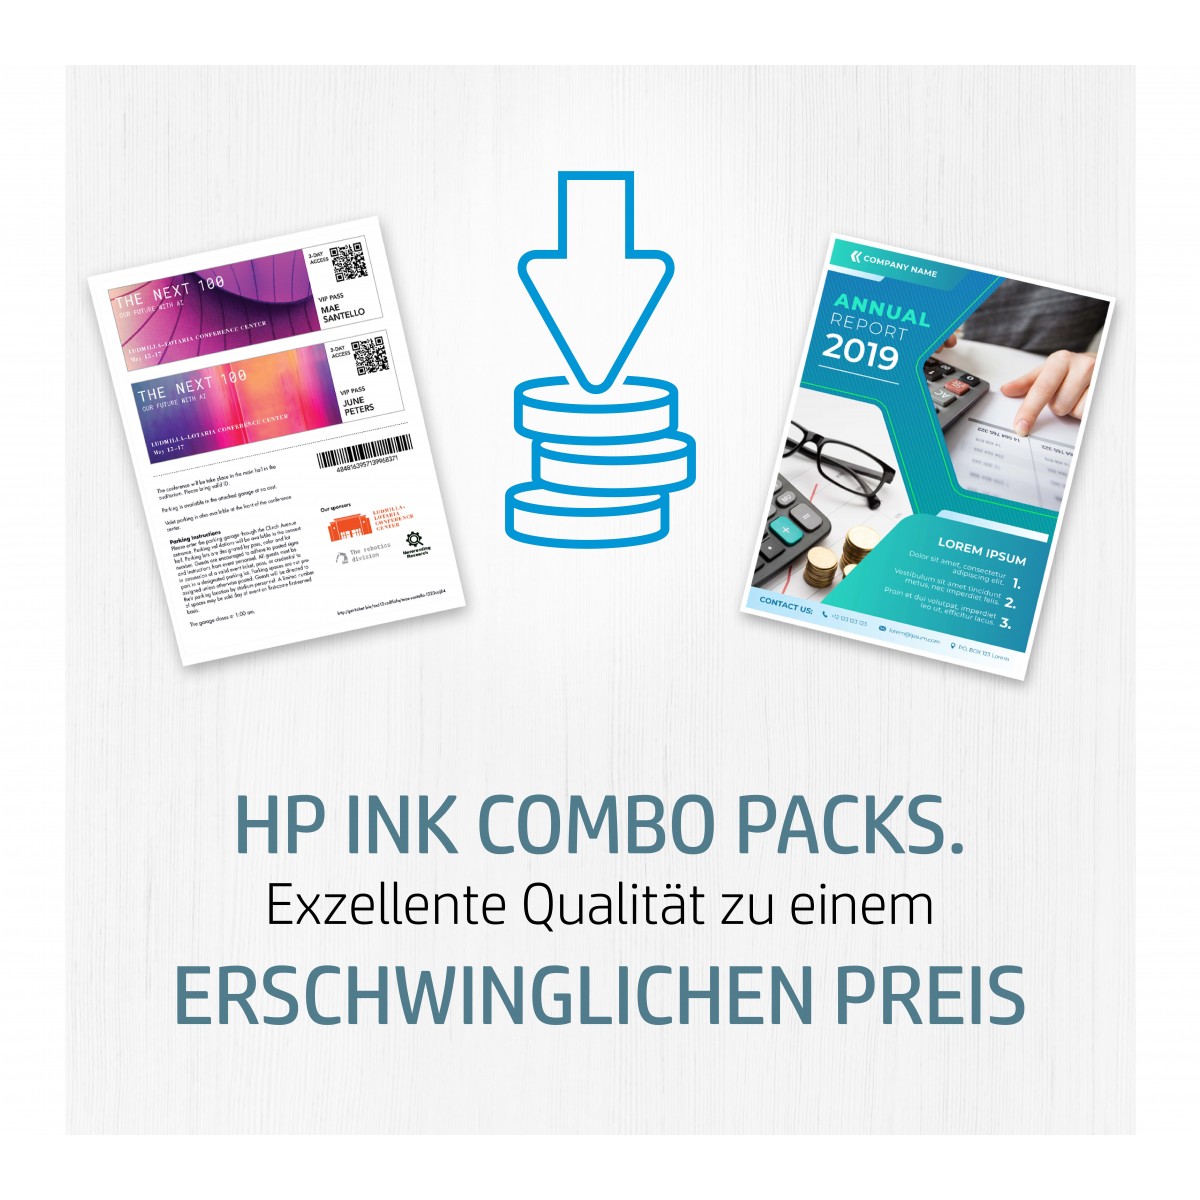 HP 950/951 - Original - Pigment-based ink - Black - Cyan - Magenta - Yellow - HP - Combo pack - OfficeJet Pro 8100 - 8600 - 8610